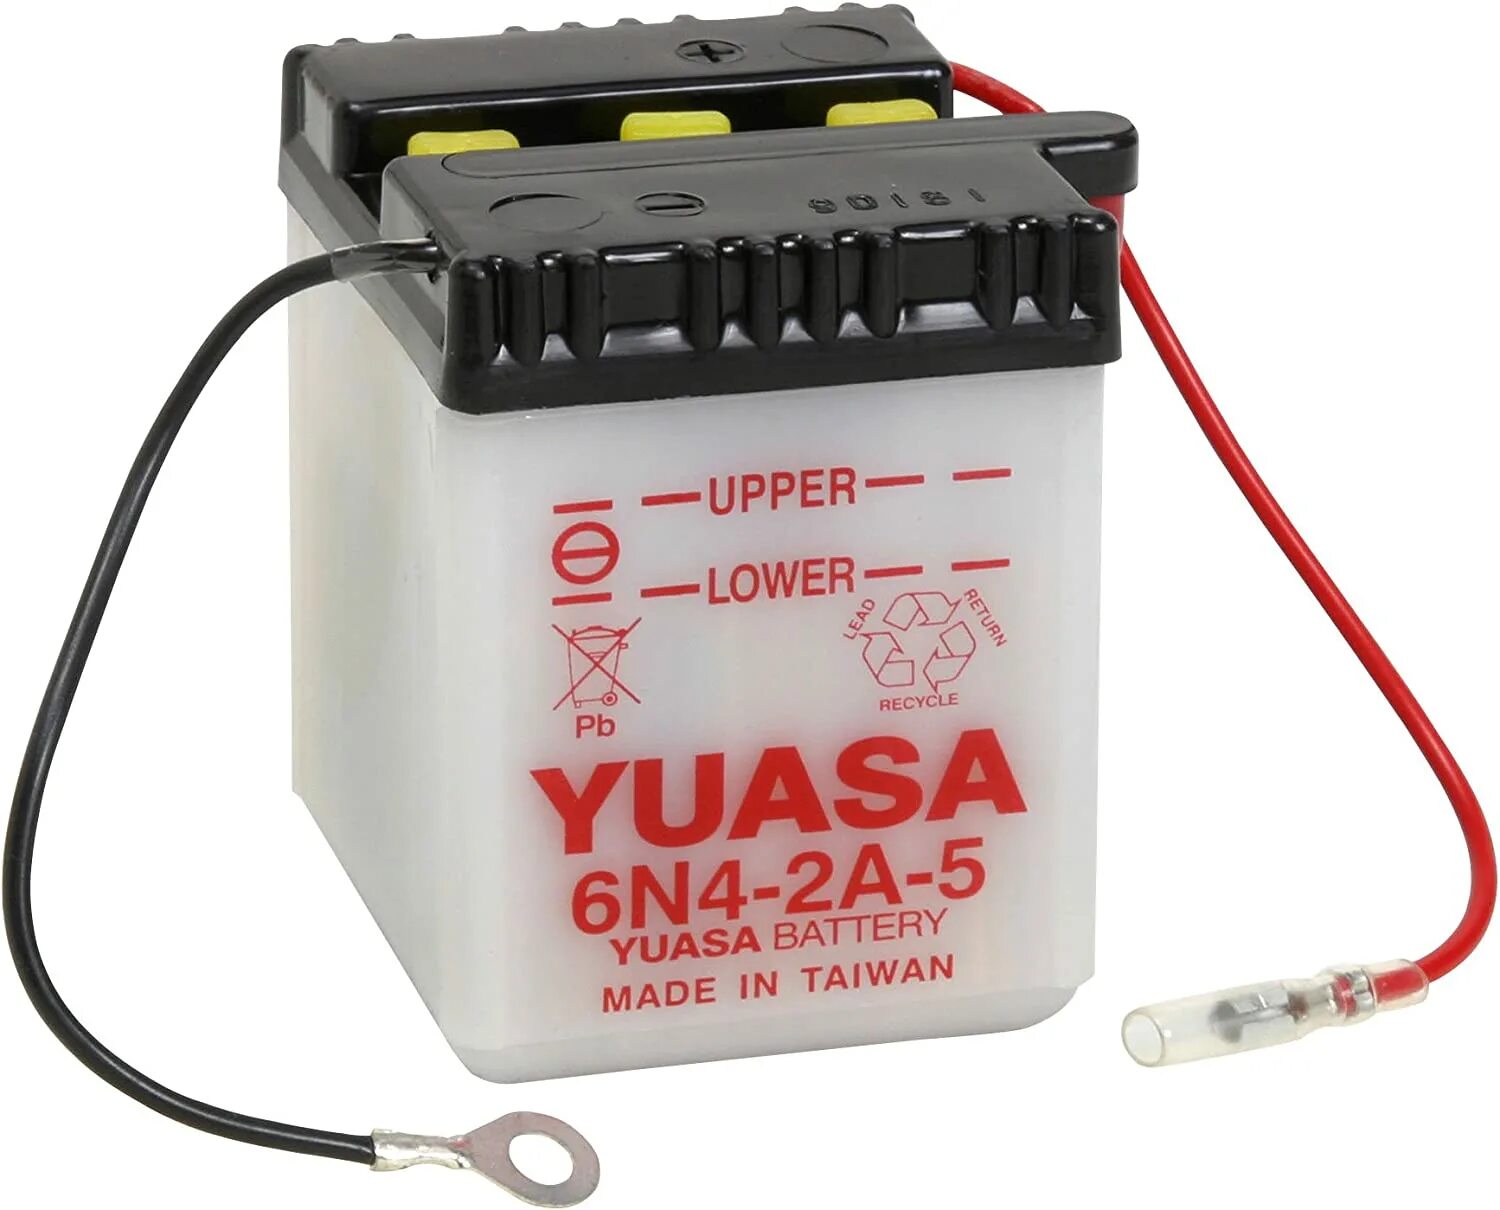 Yuasa аккумуляторы купить. Мото аккумуляторы Yuasa. Сухозаряженный аккумулятор Yuasa. Мото аккумуляторы шести вольт. Аккумуляторы Yuasa Moto реклама.